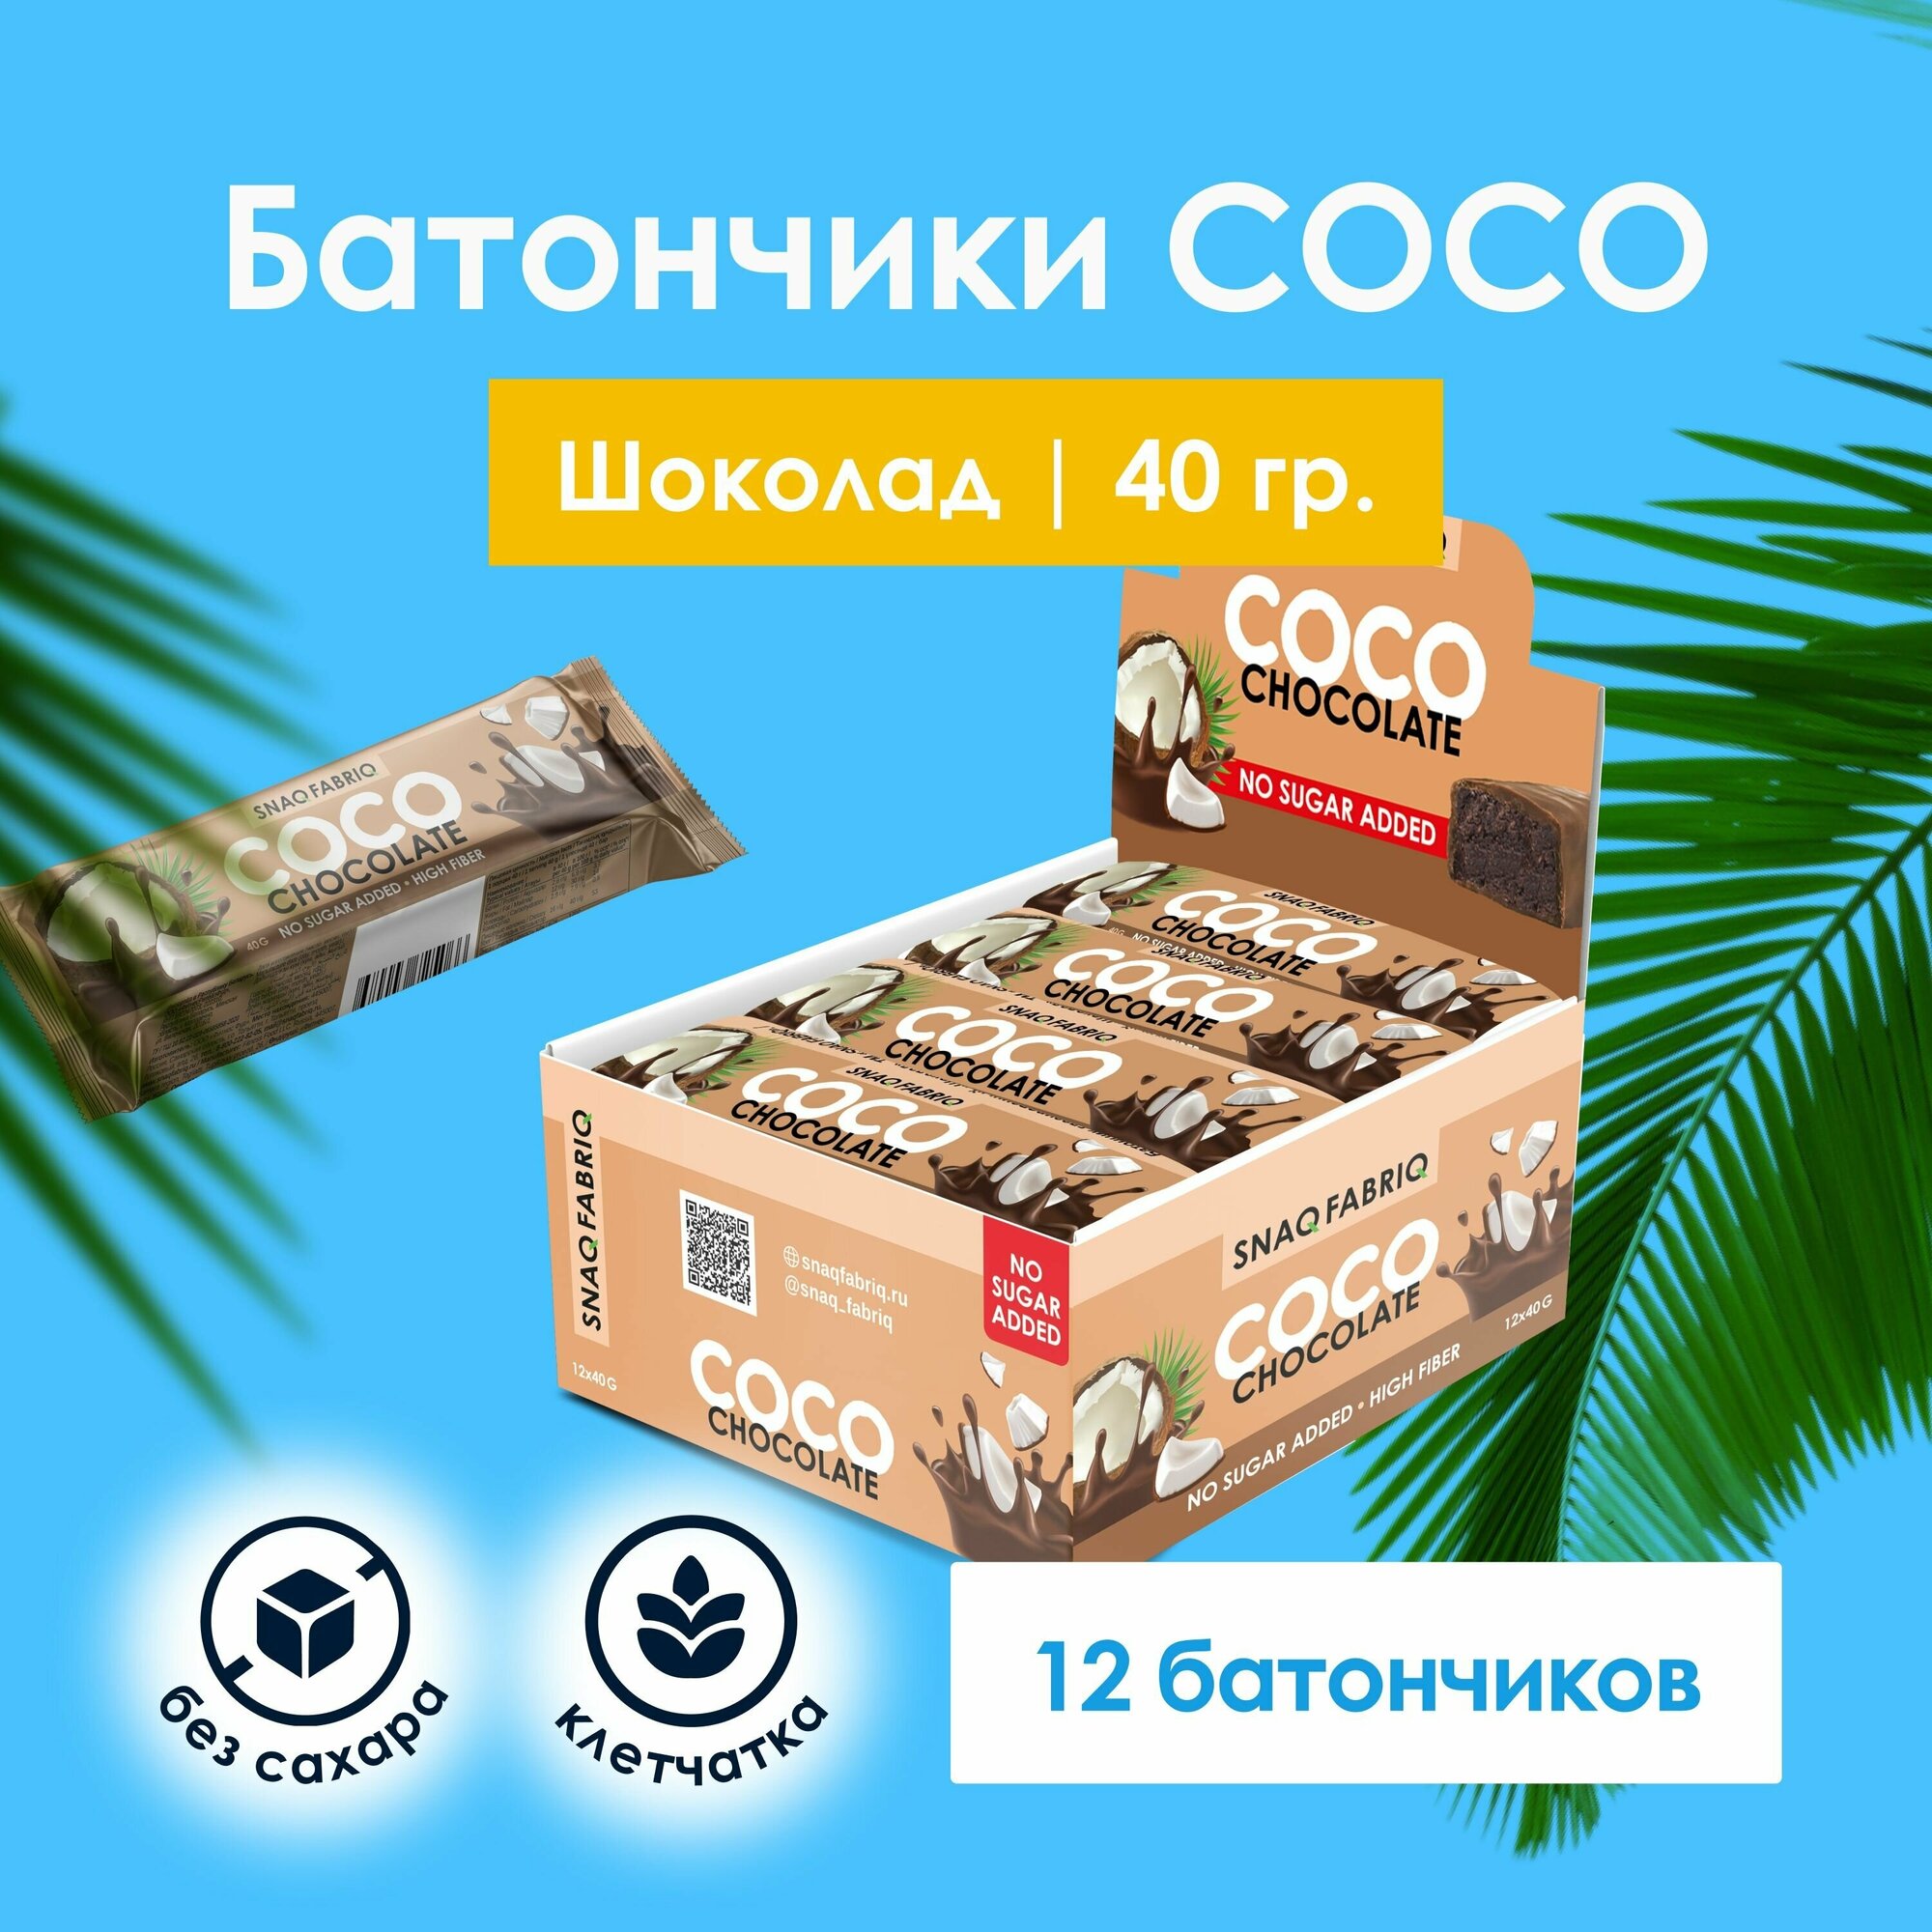 Кокосовые батончики Snaq Fabriq COCO без сахара "Кокос и Шоколад", 12шт х 40г - фотография № 1